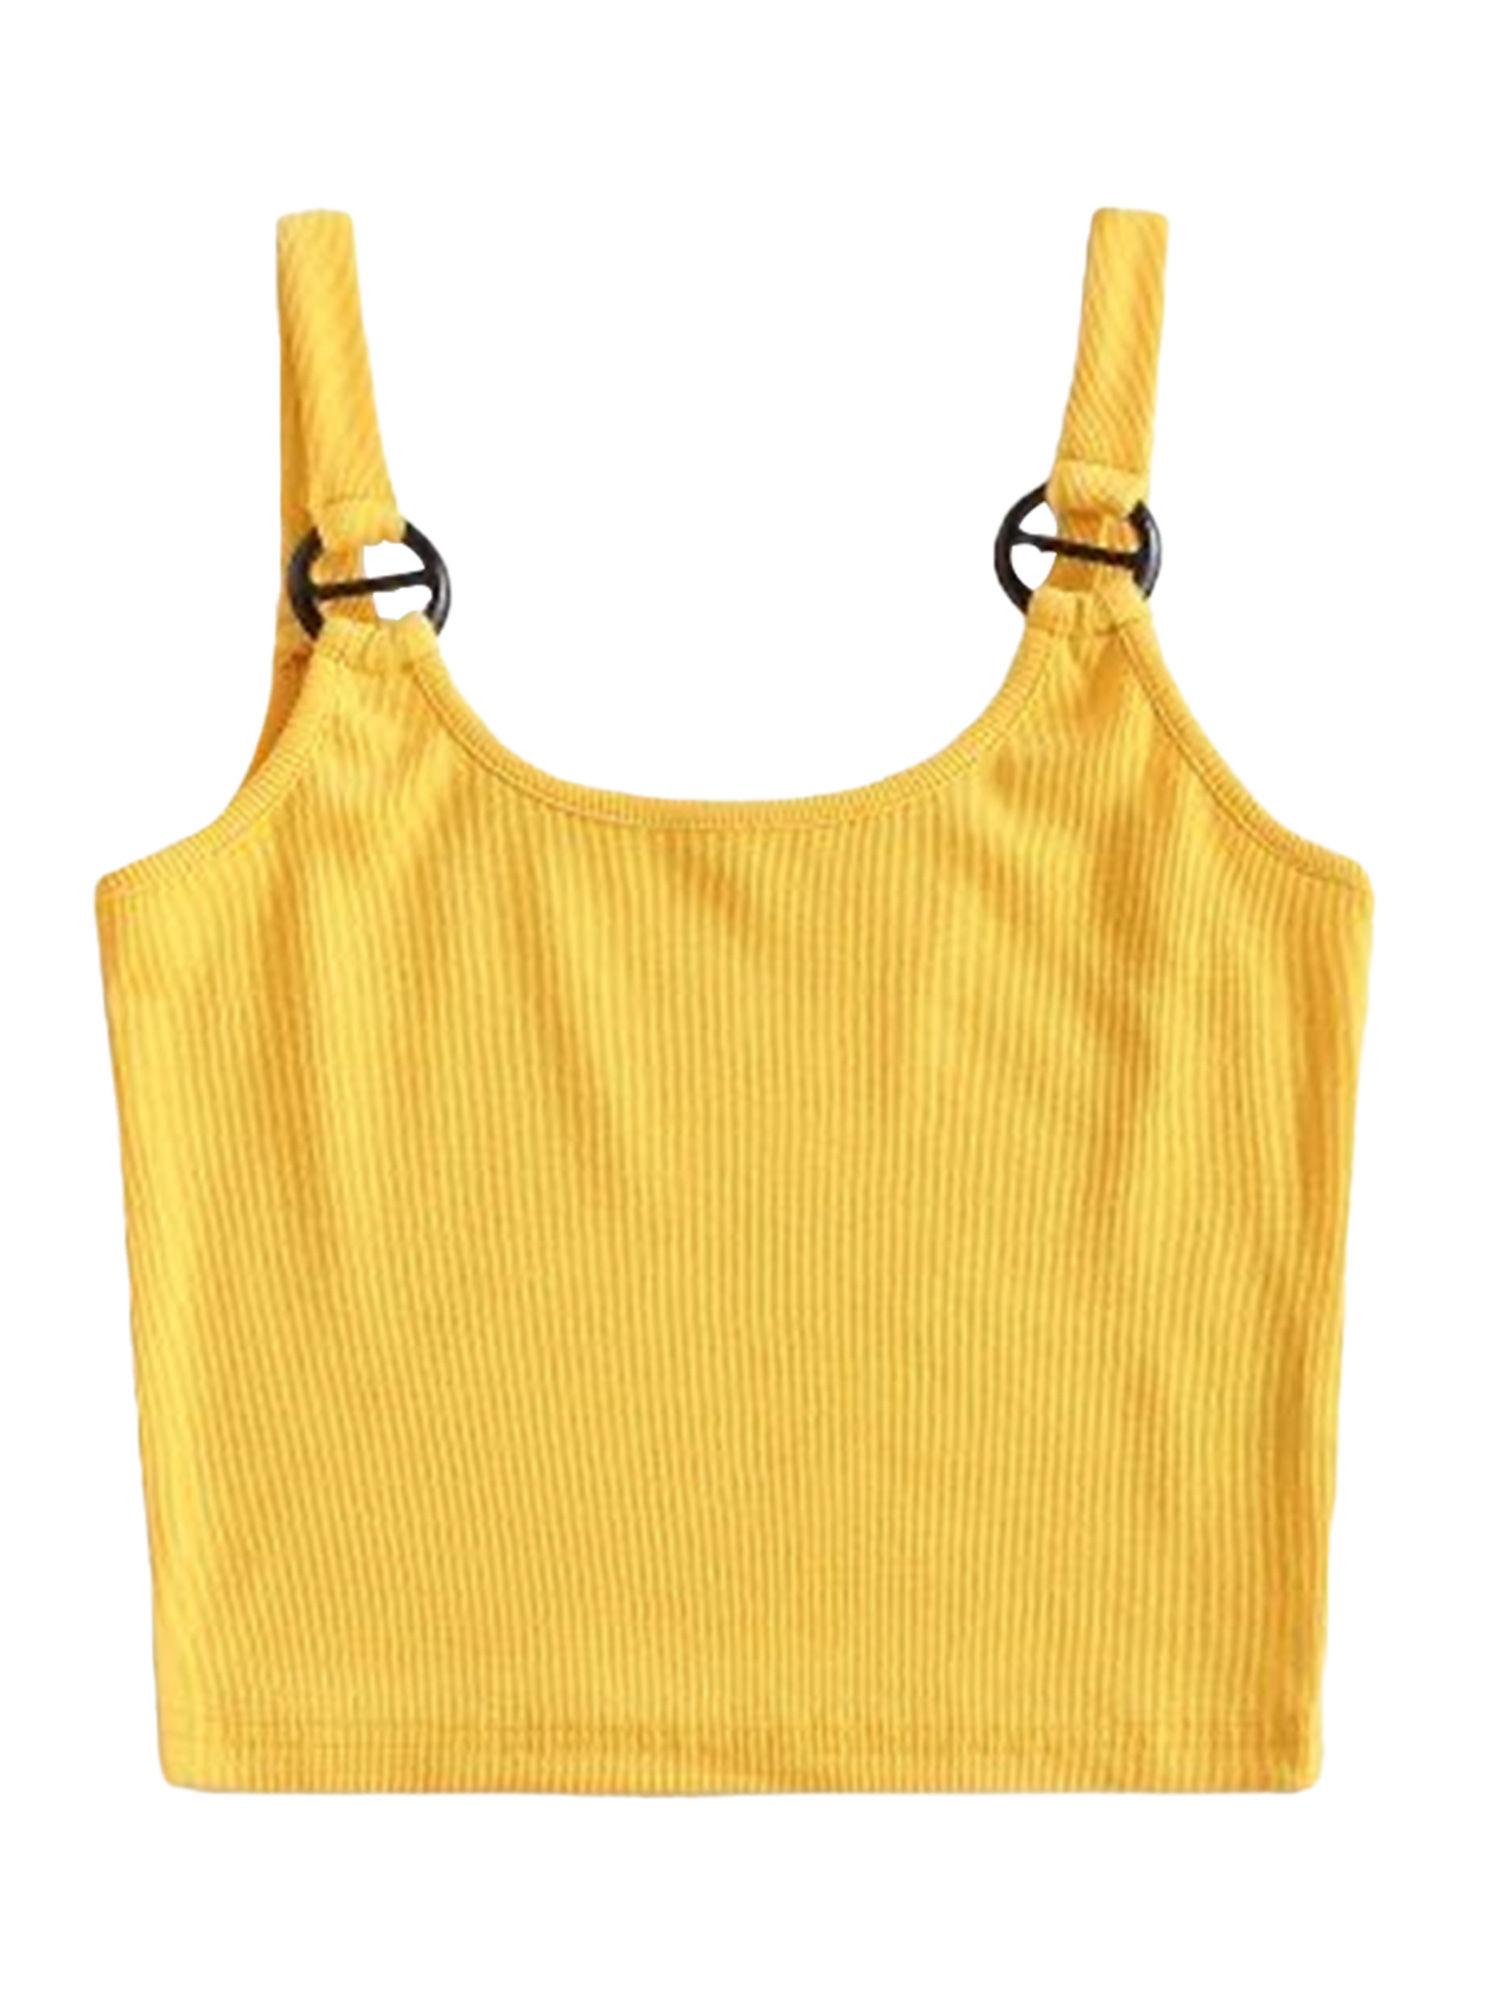 yellow stylish crop top sleeveless for women